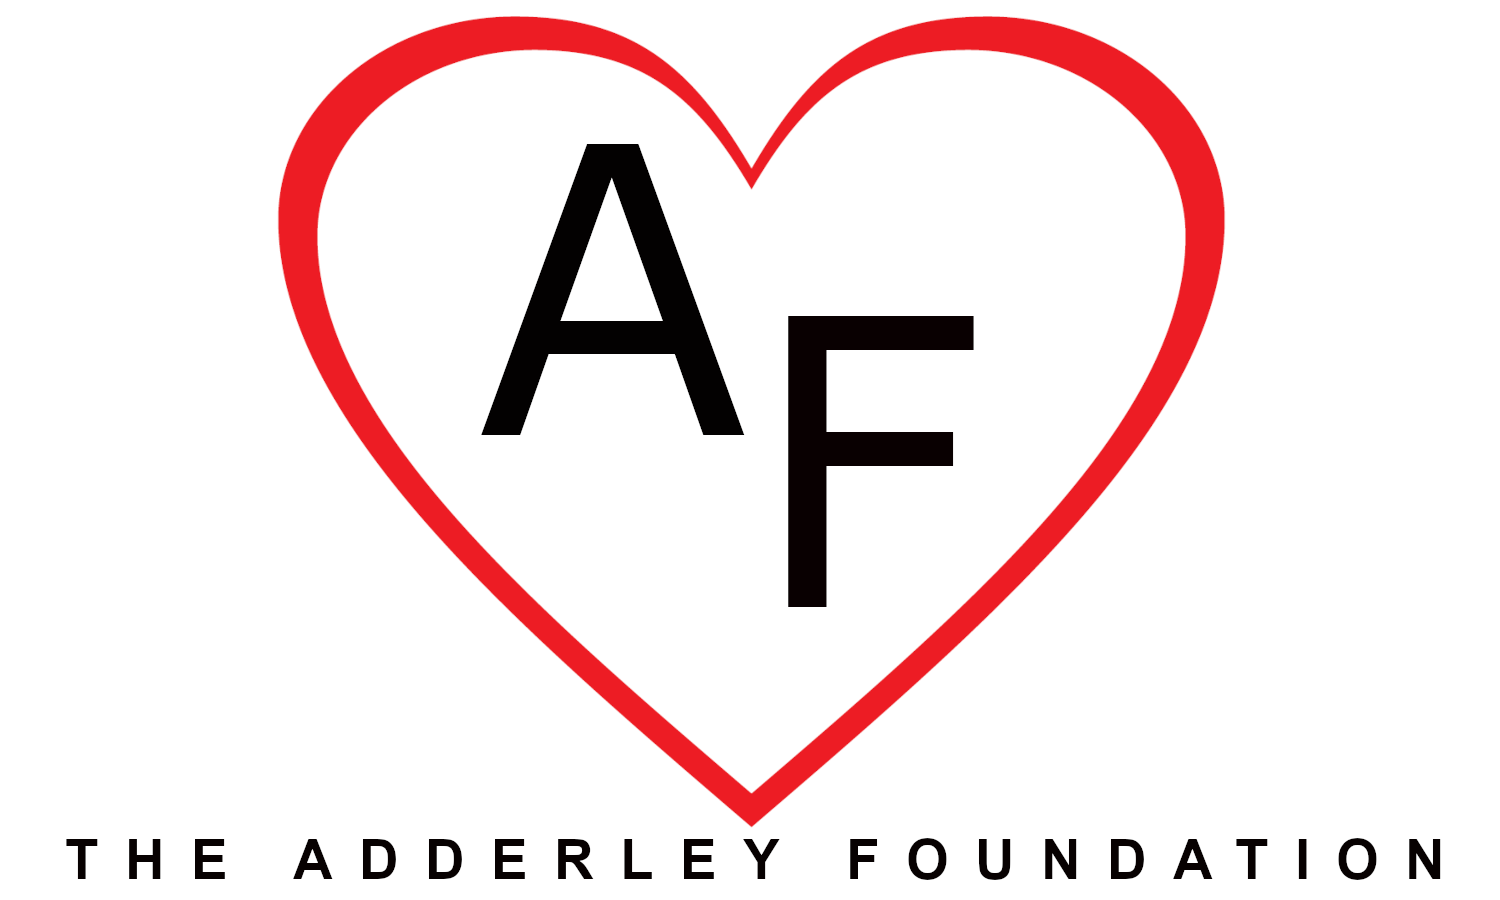 The Adderley Foundation